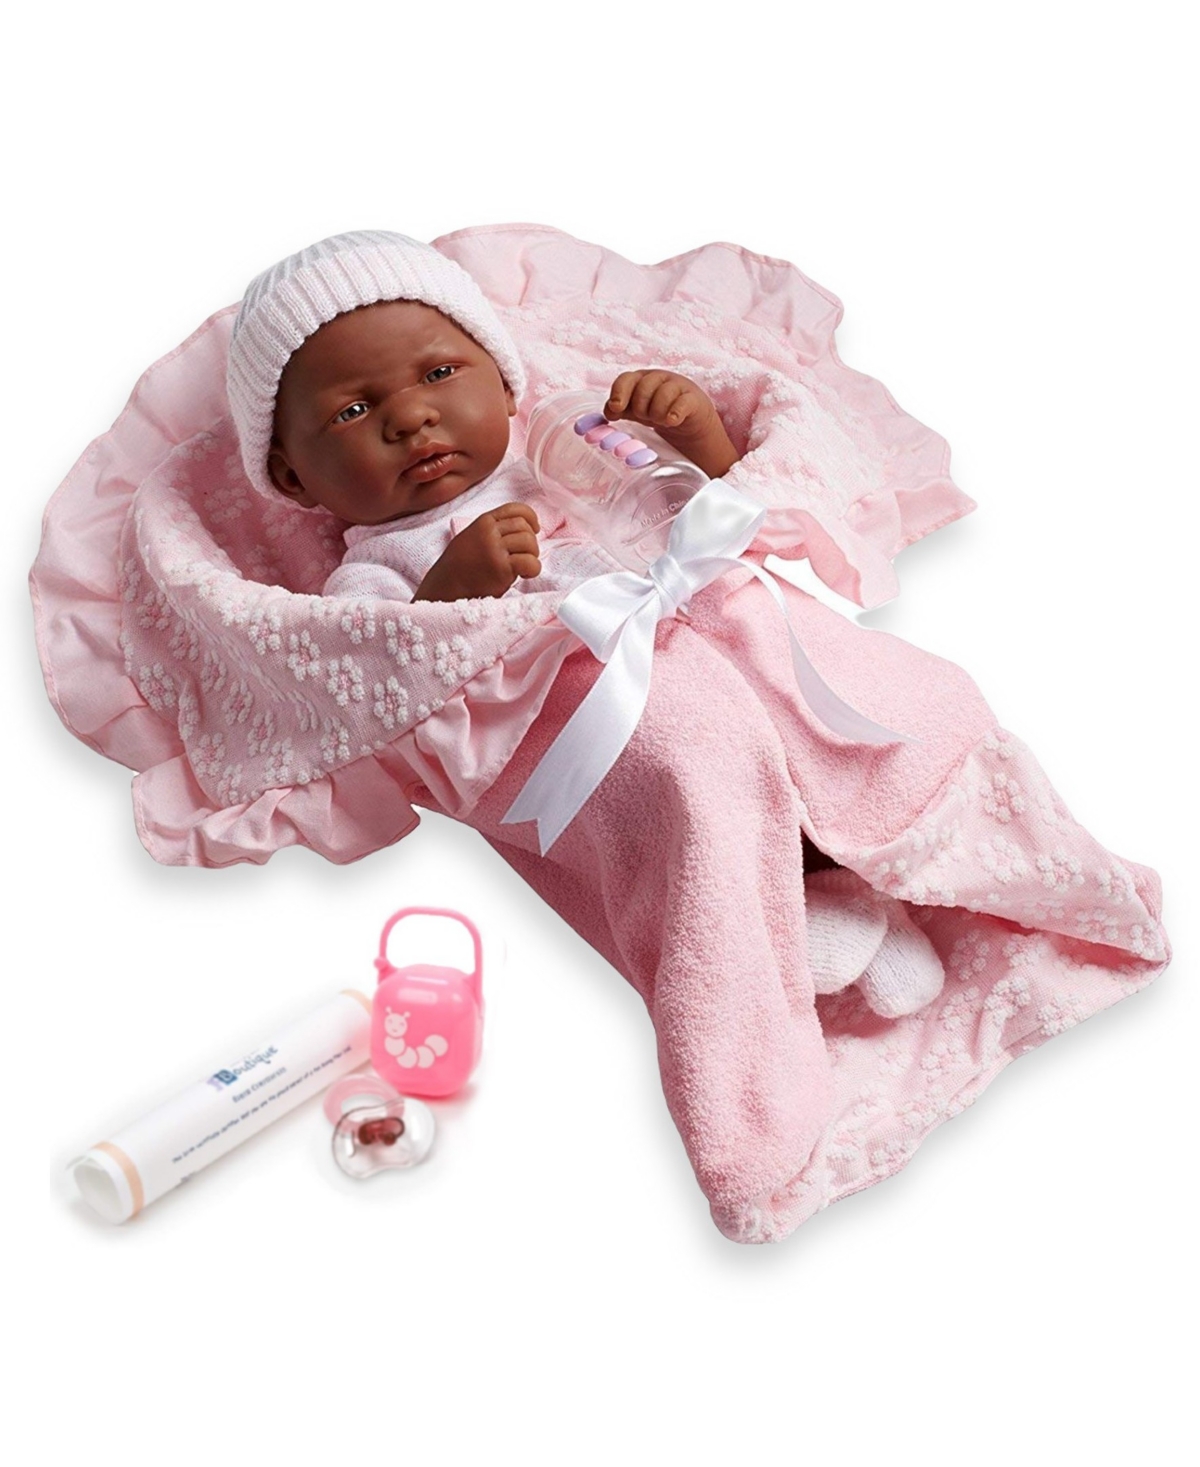 Jc Toys La Newborn Nursery 15.5" African American Soft Body Baby Doll In African American - Pink